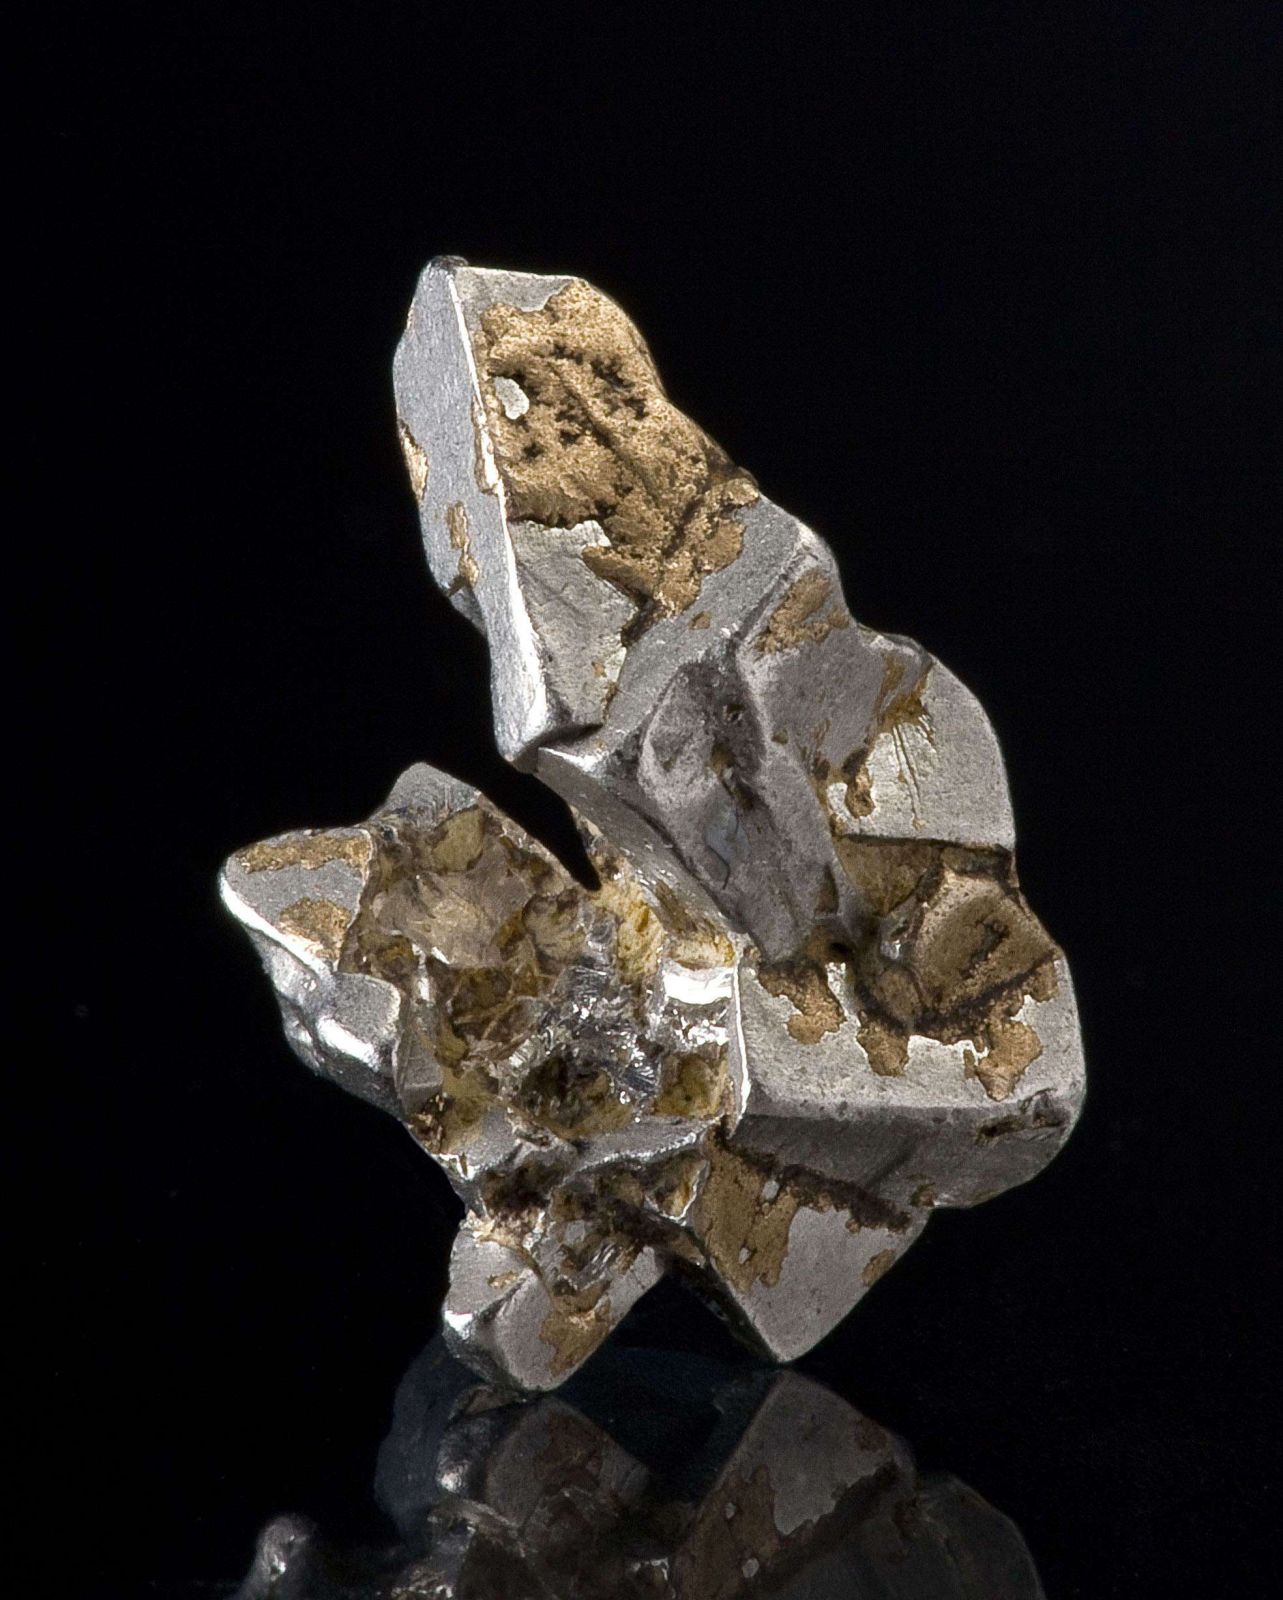 Platinum With Gold - TUC114-106 - Konder - Russia Mineral Specimen